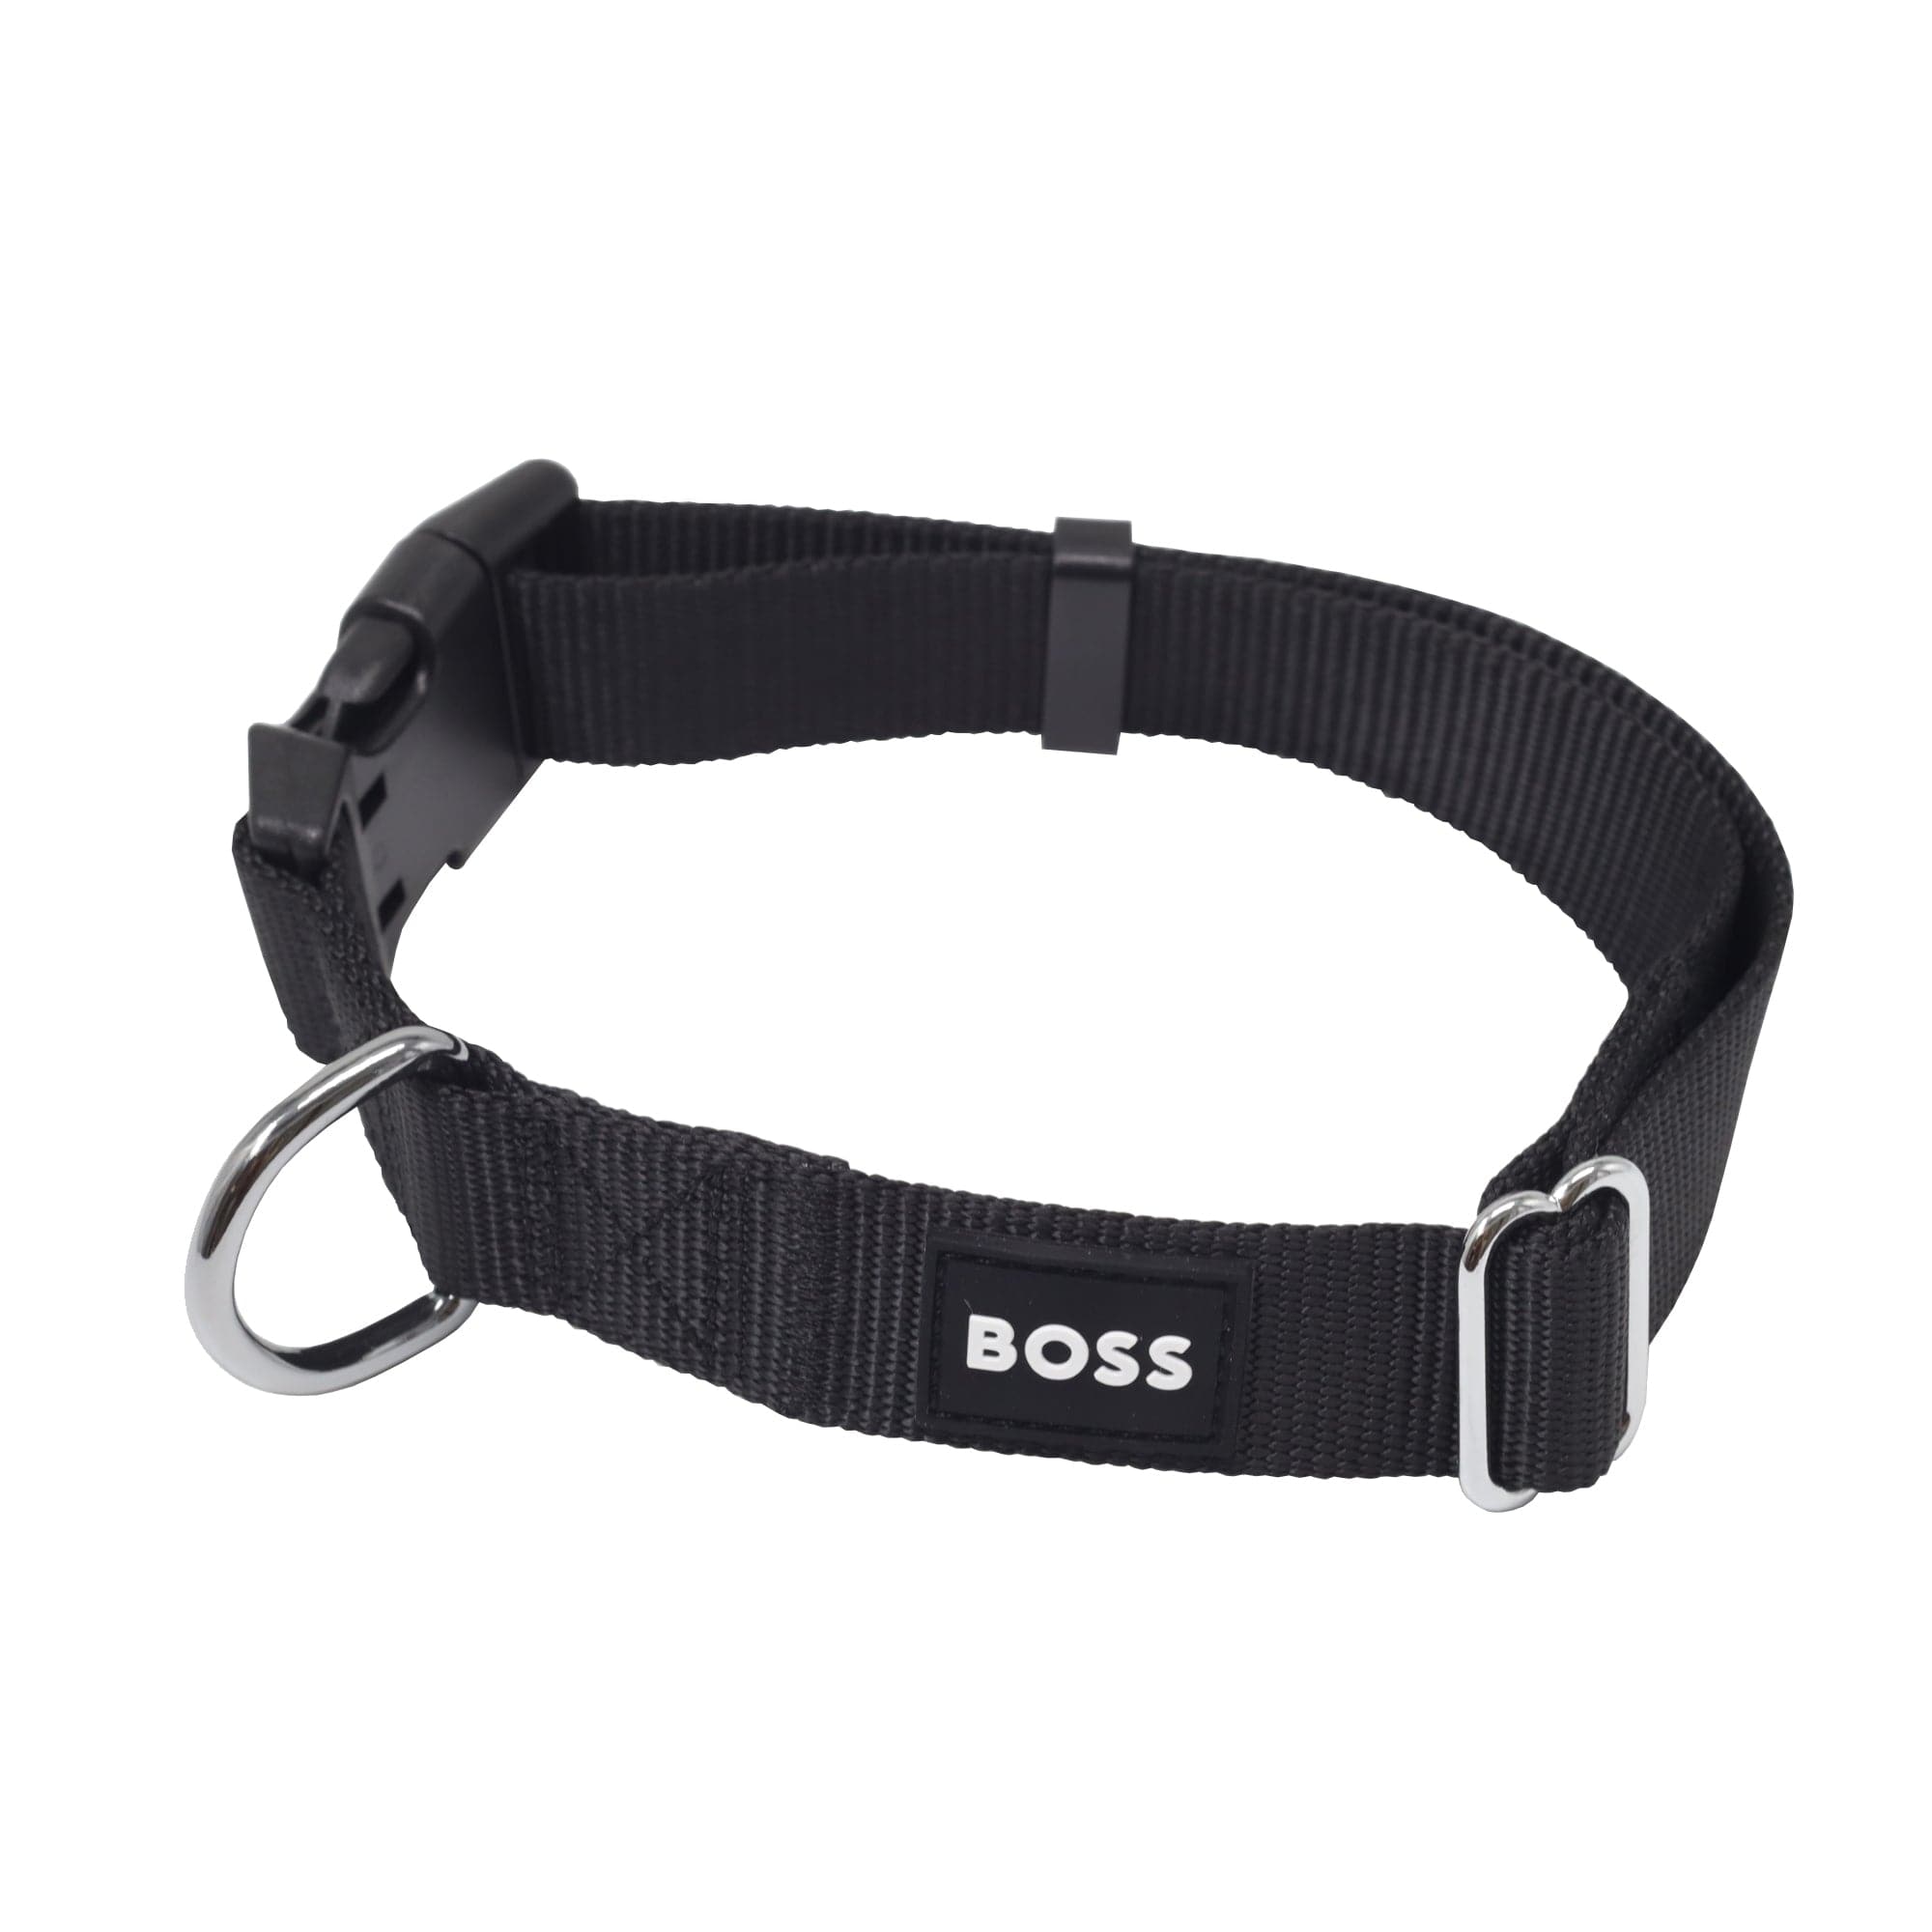 BOSS dog collar